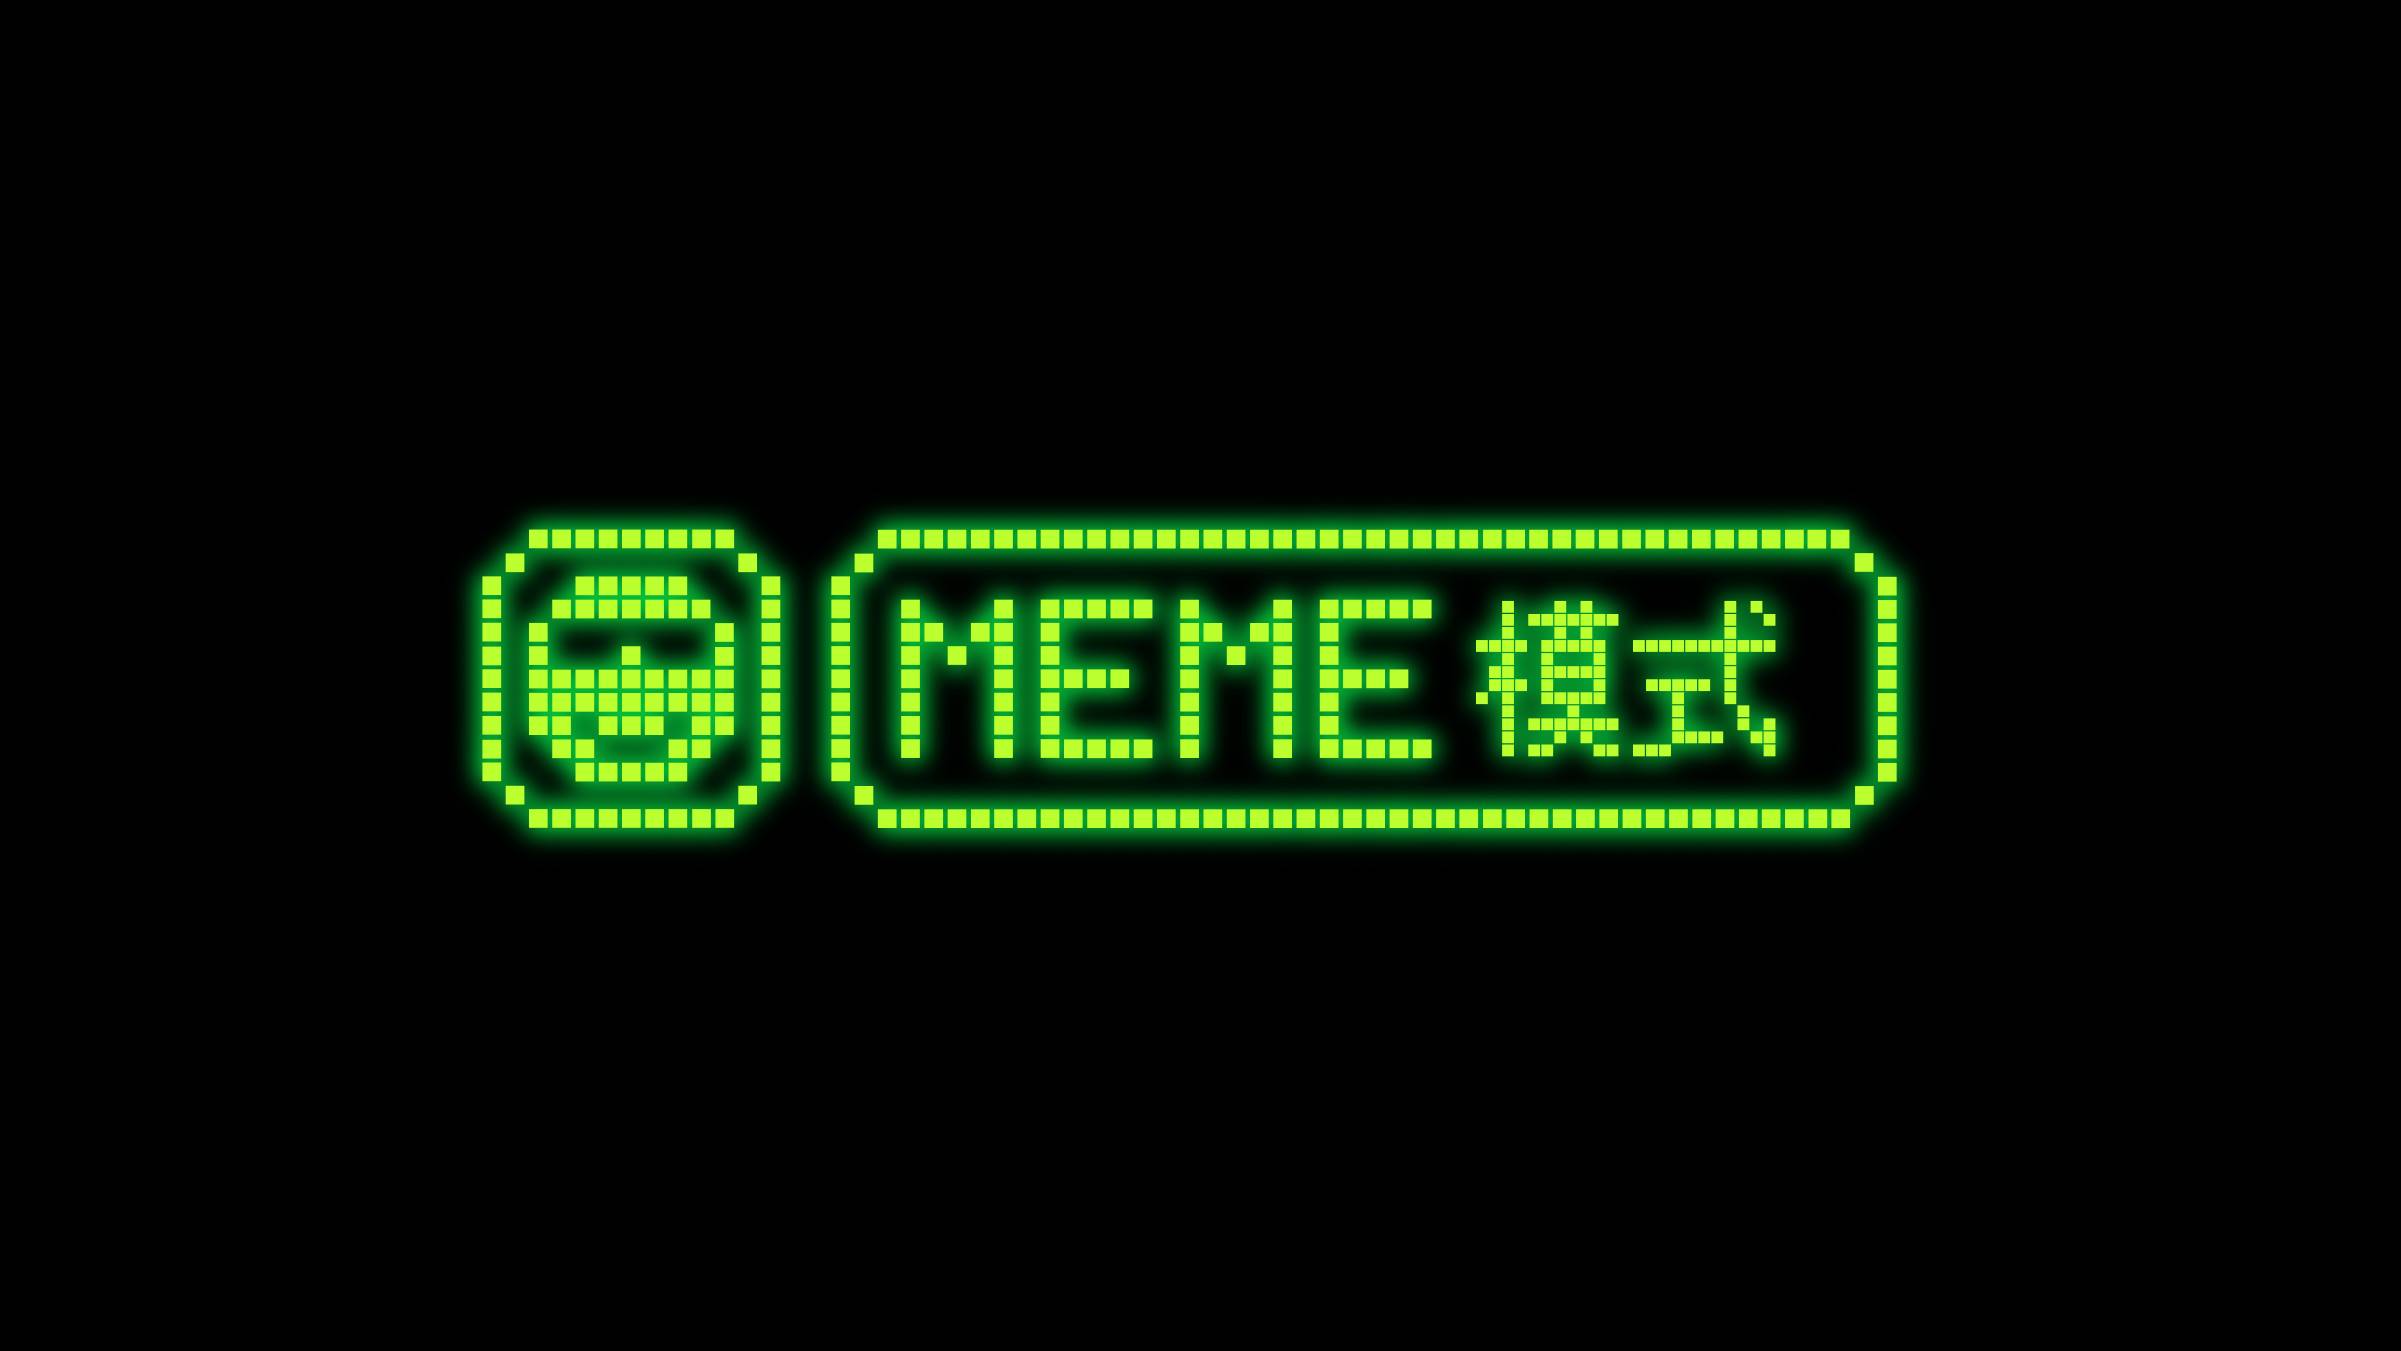 Memecoin 交易一步到位，OKX Web3 钱包上线 Meme 模式，交易体验大升级